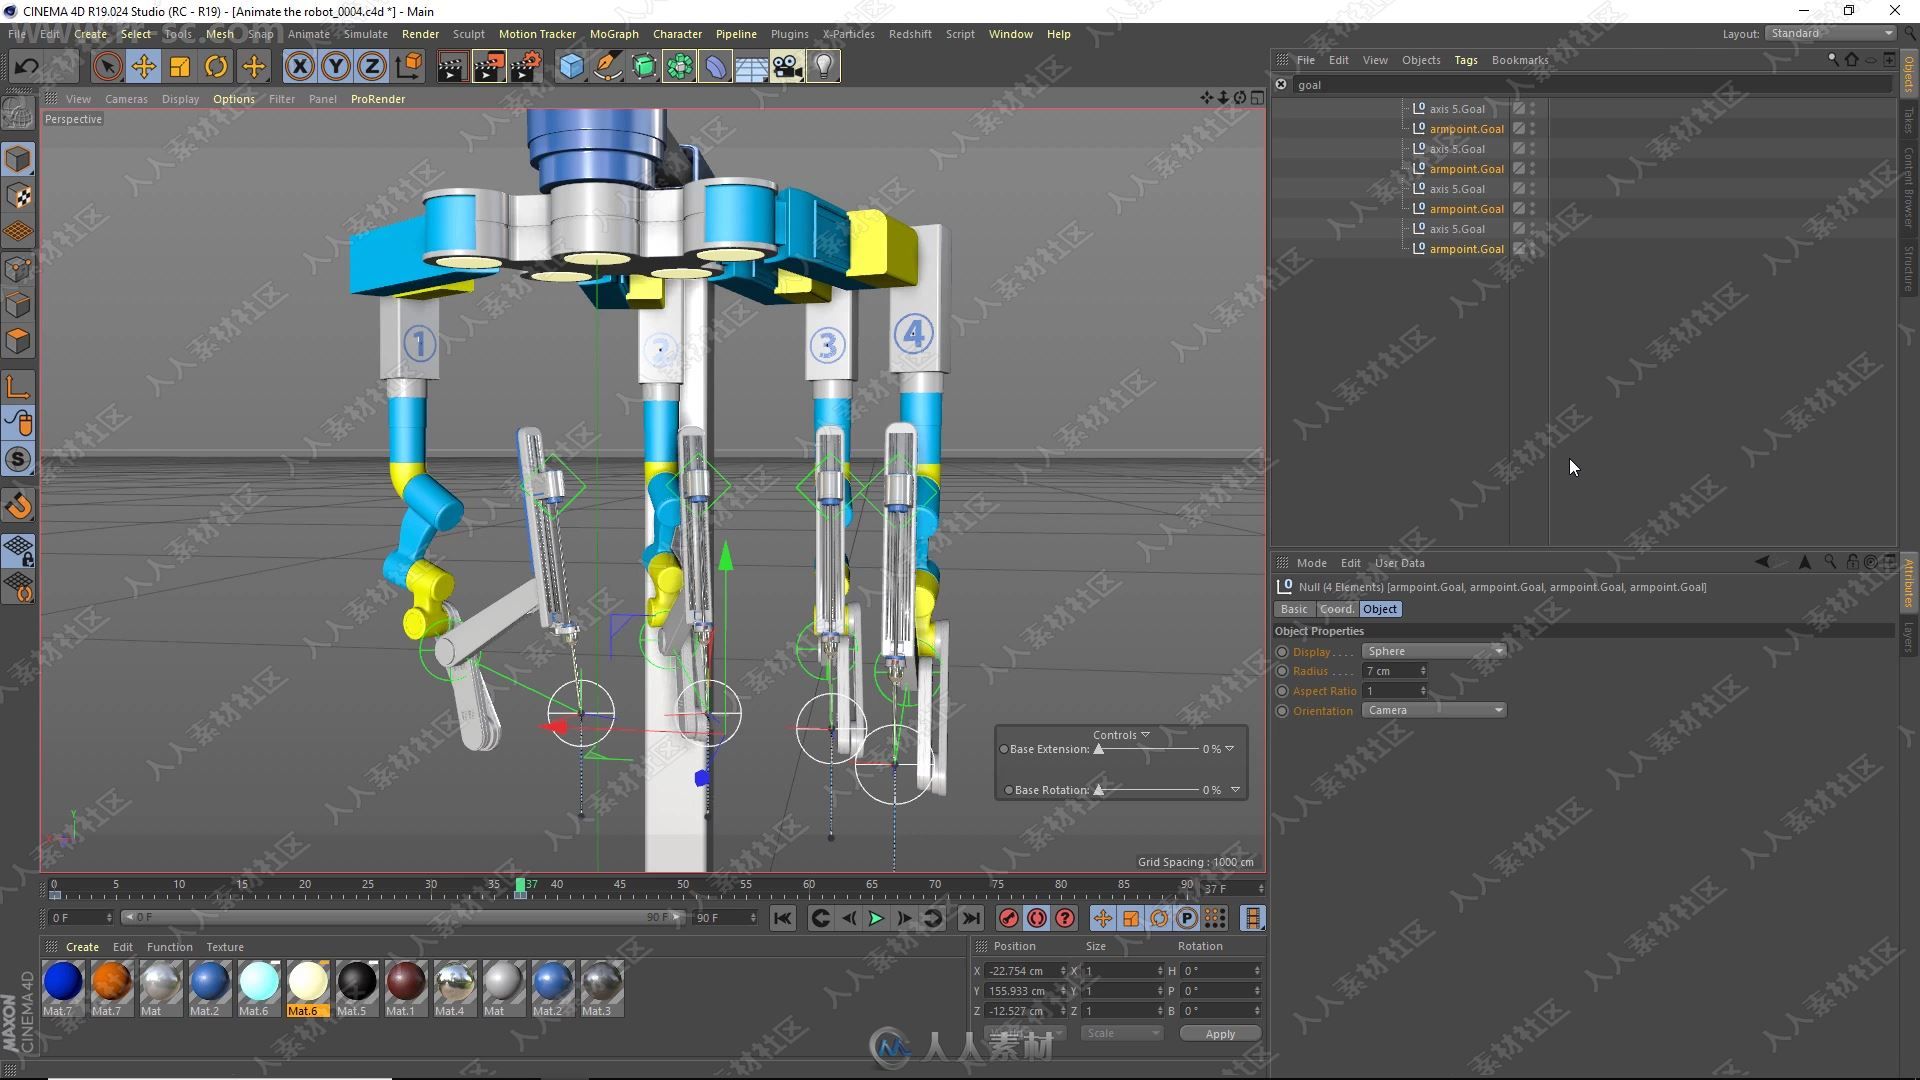 Cinema 4D精准外科机械手臂动画制作视频教程